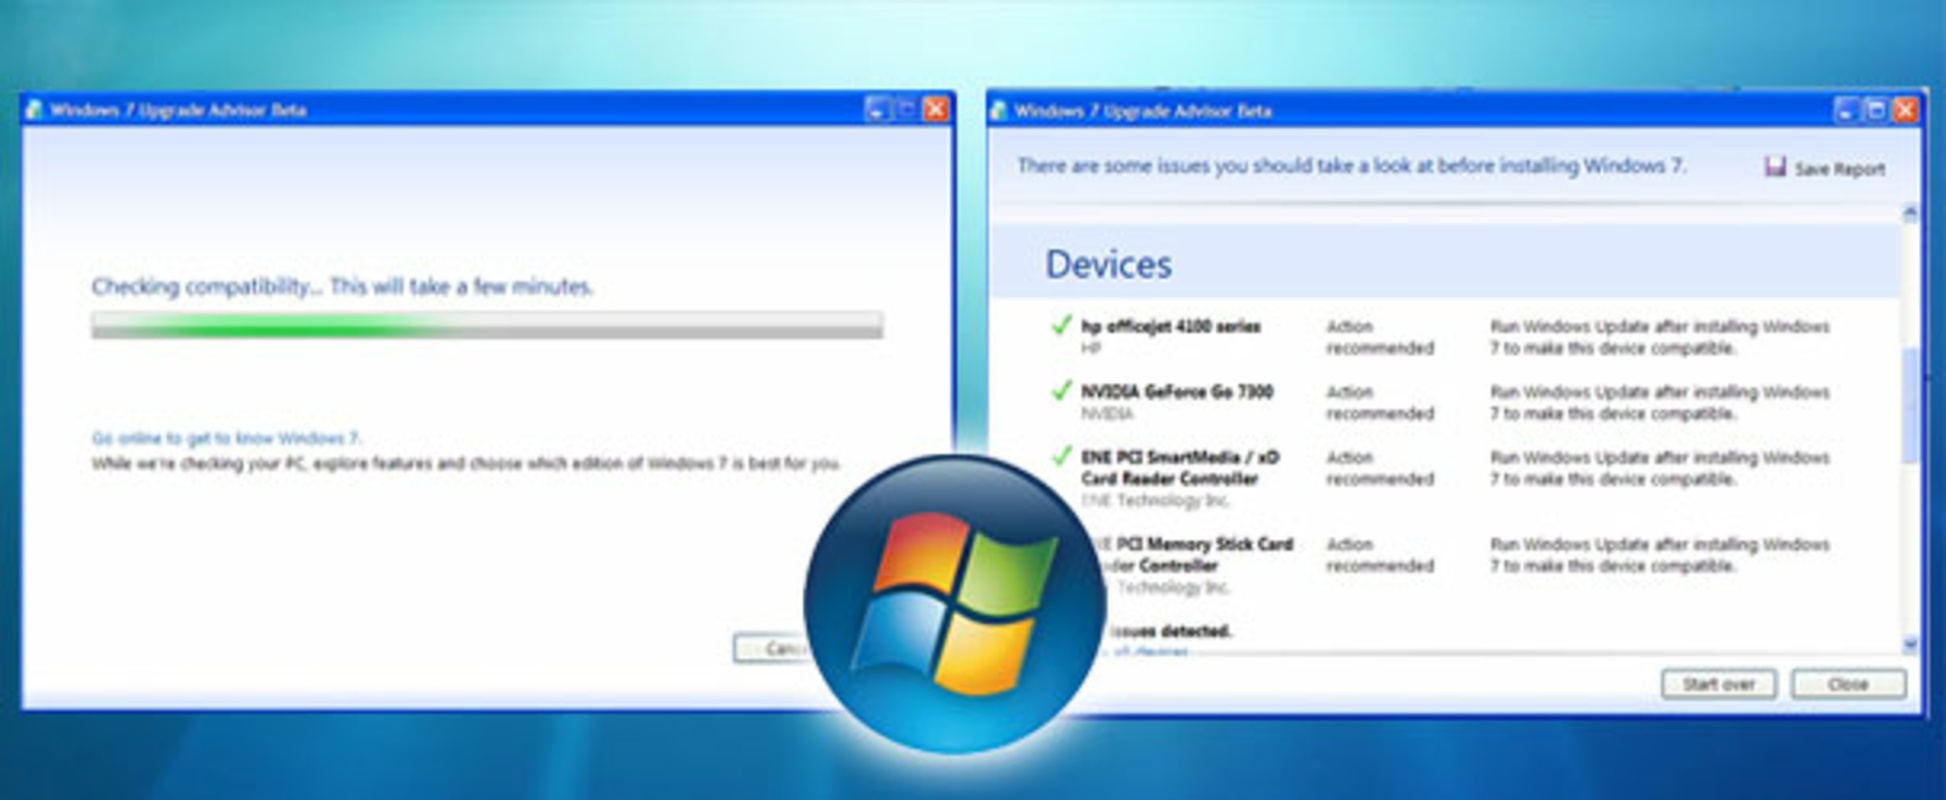 Windows 7 Upgrade Advisor 2.0.4000.0 for Windows Screenshot 1